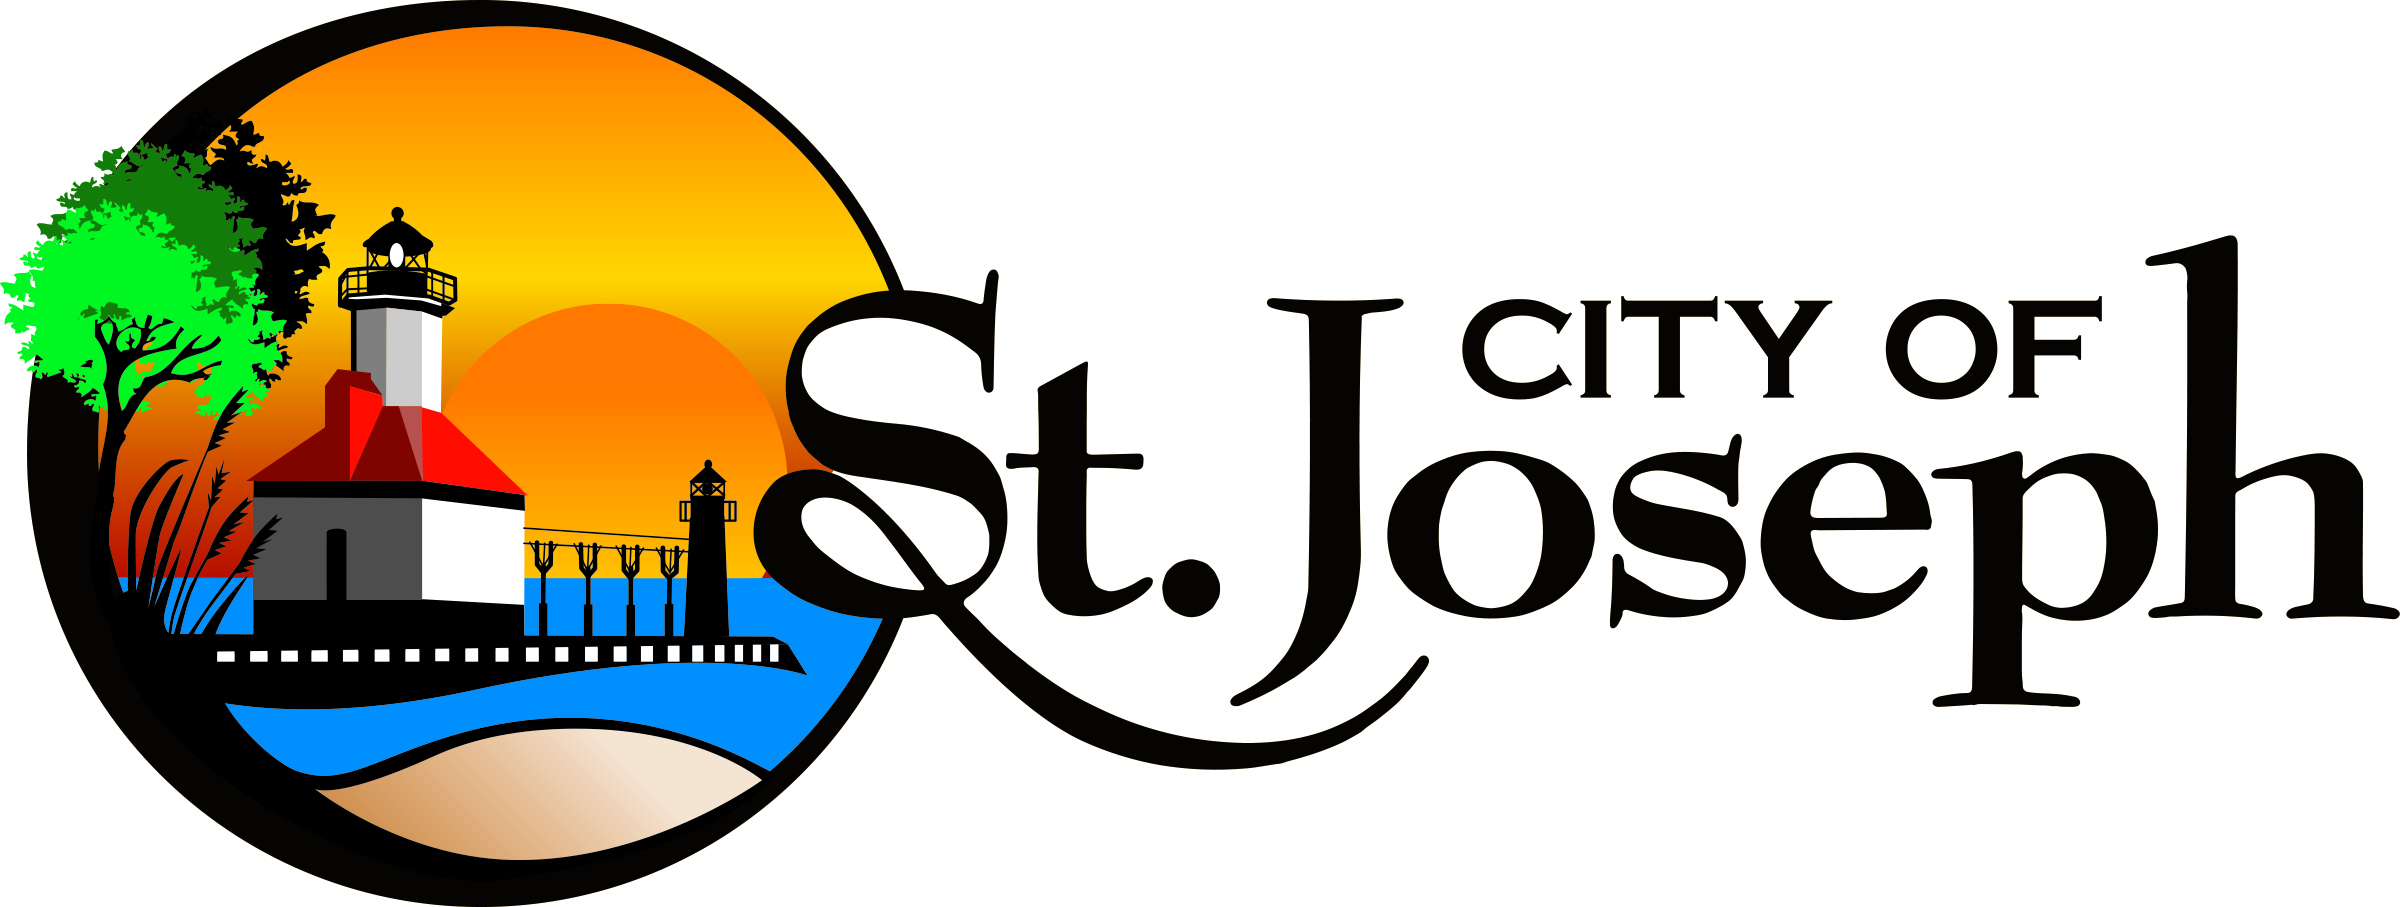 City of SJ logo